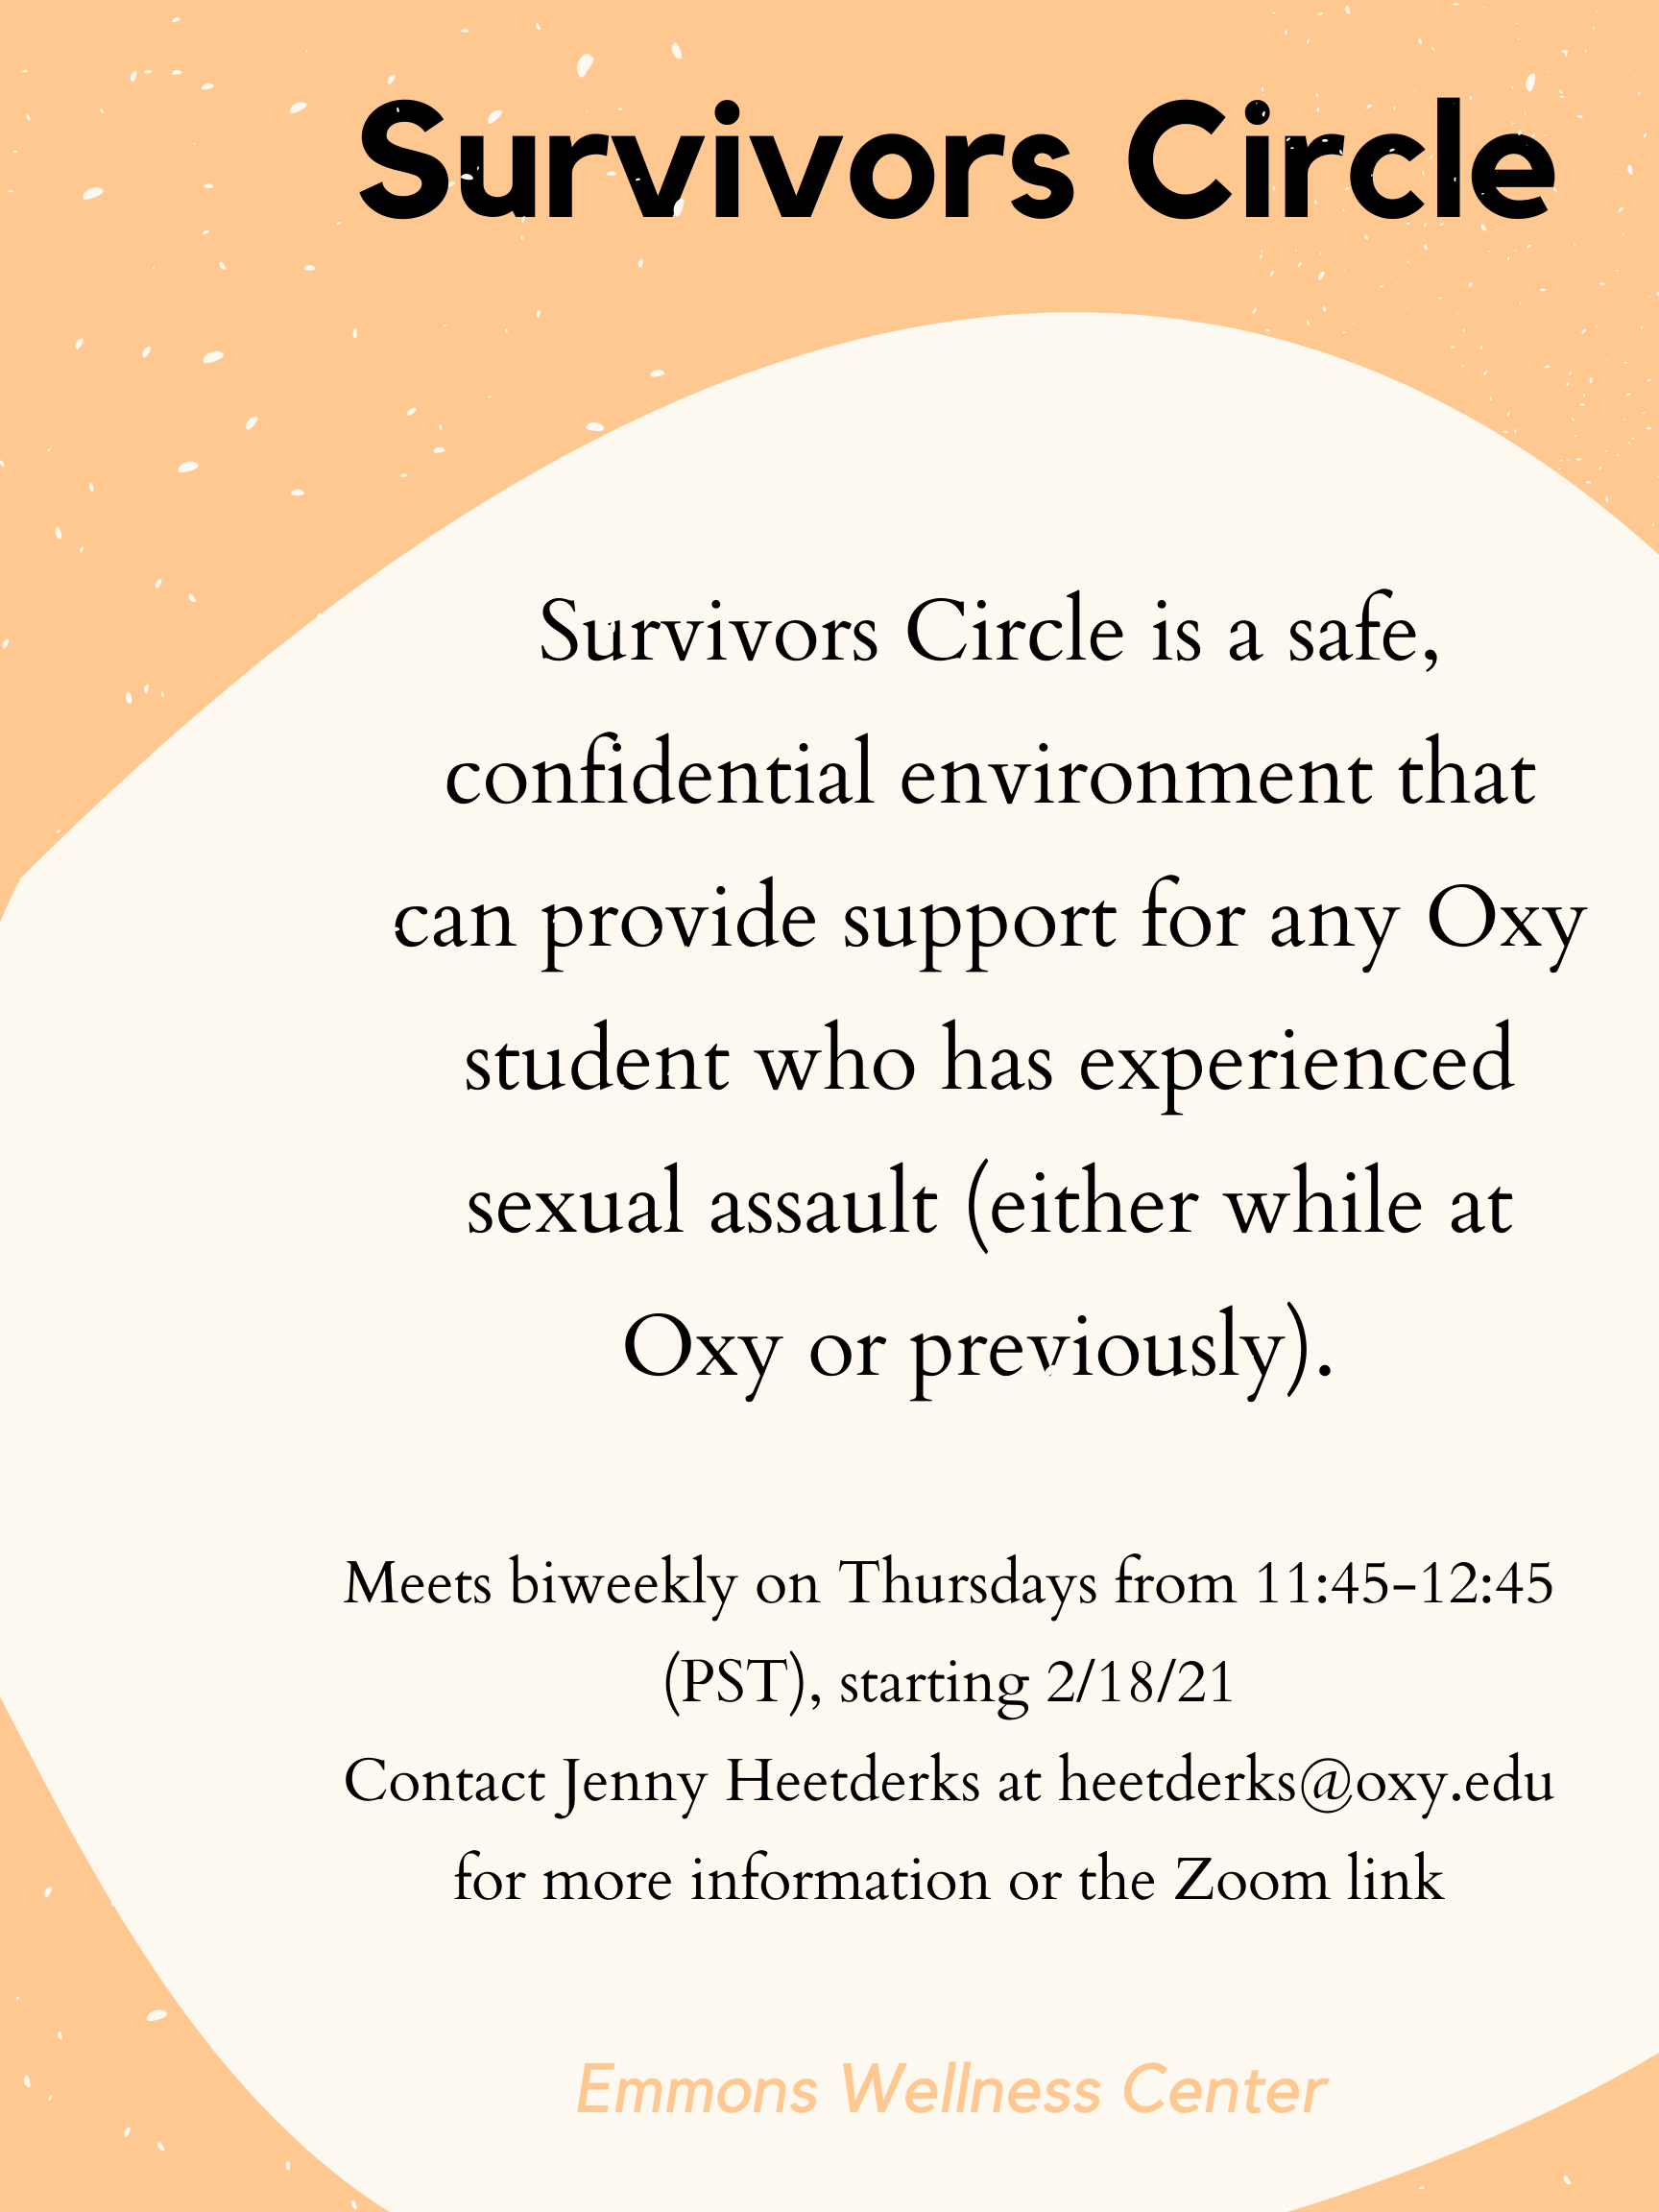 Survivors Circle flyer describing event and contact information